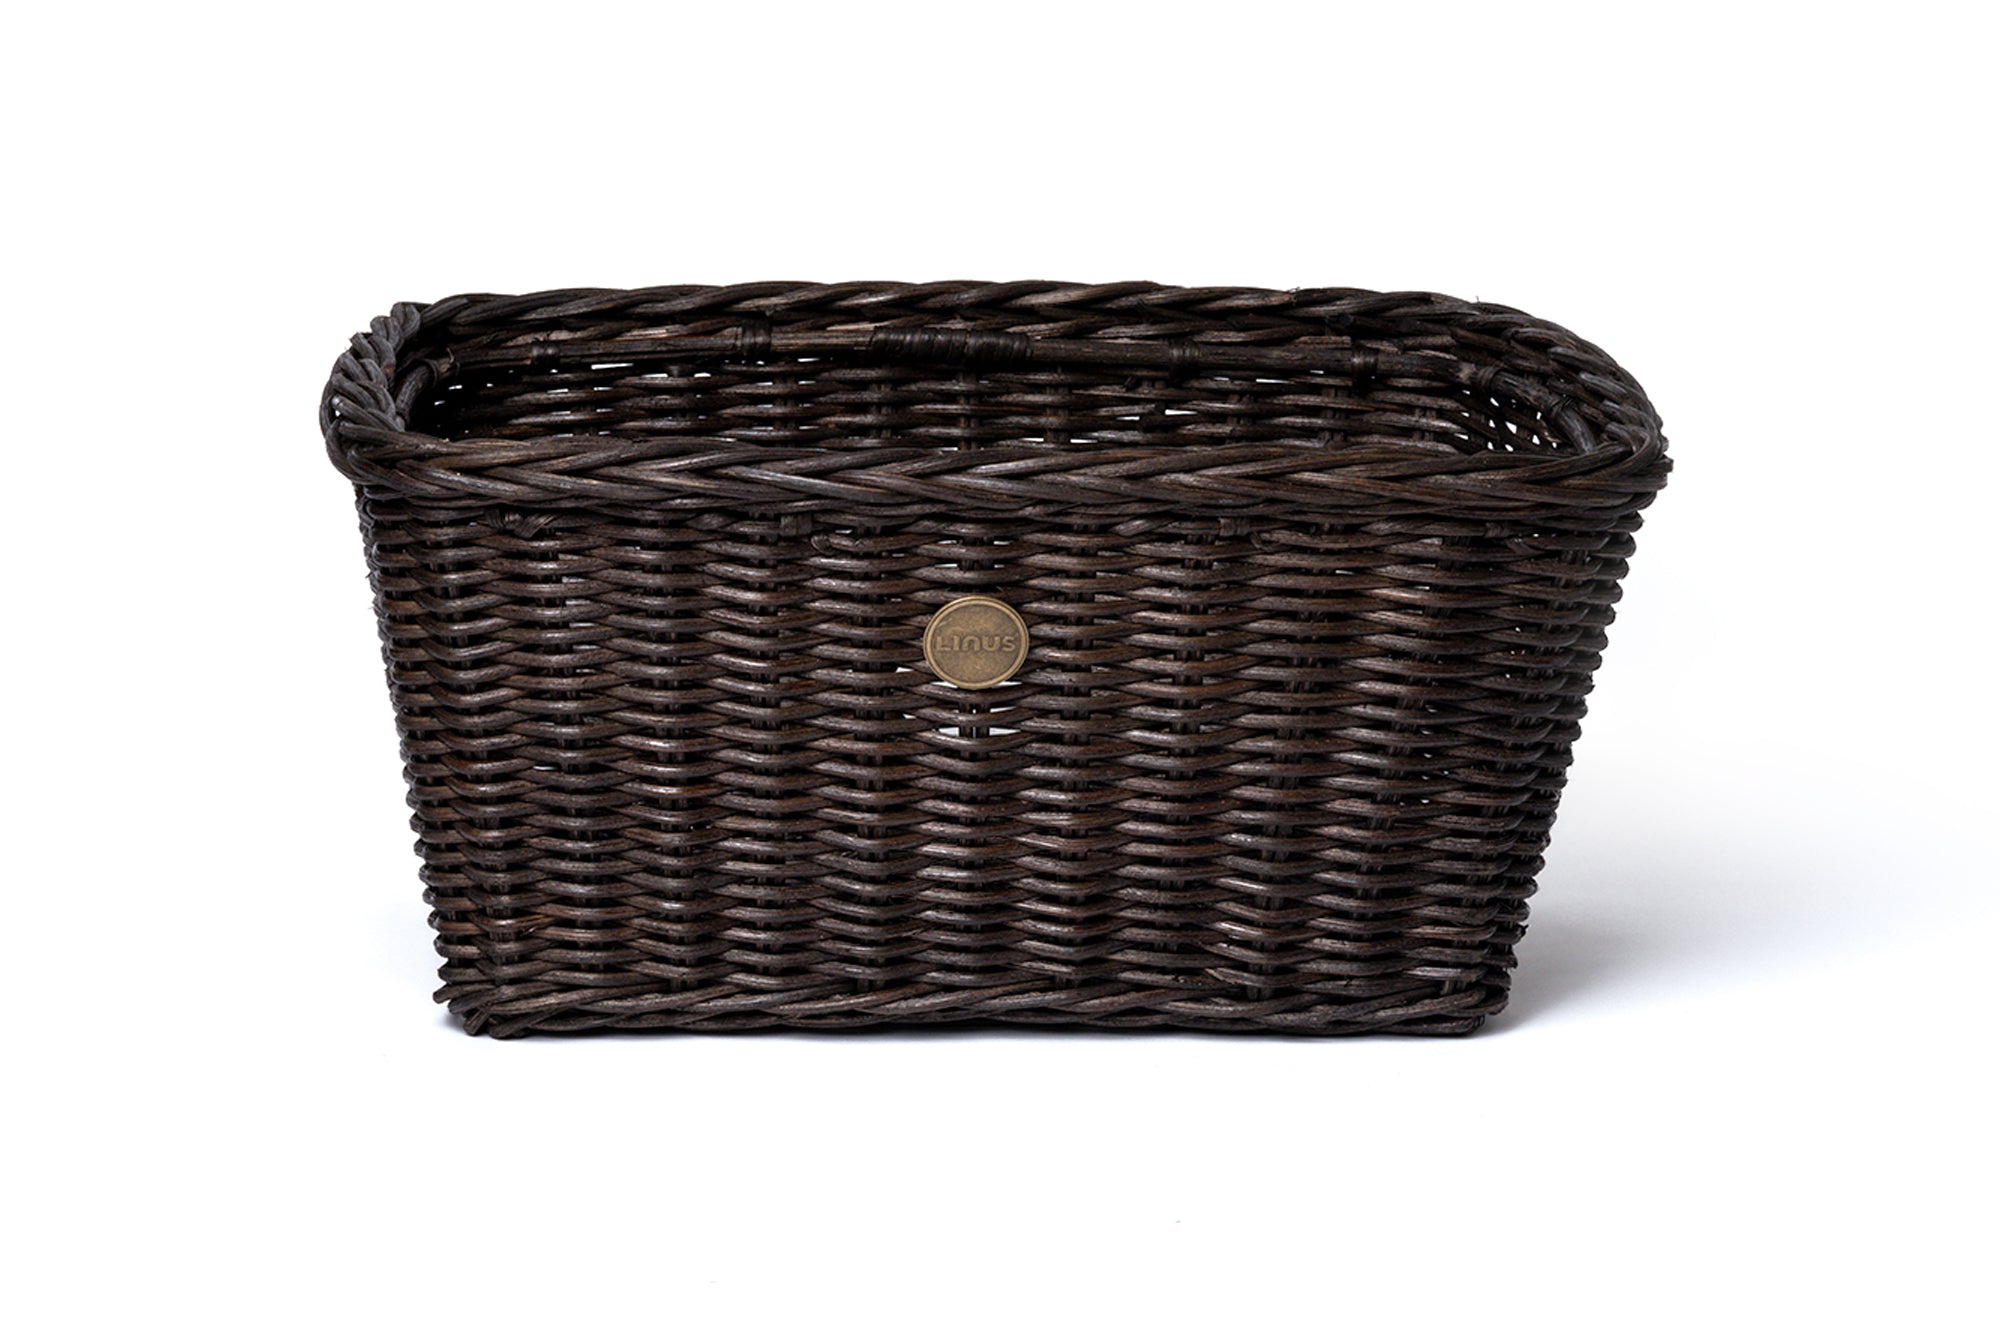 Linus Farmer's Basket - Brown